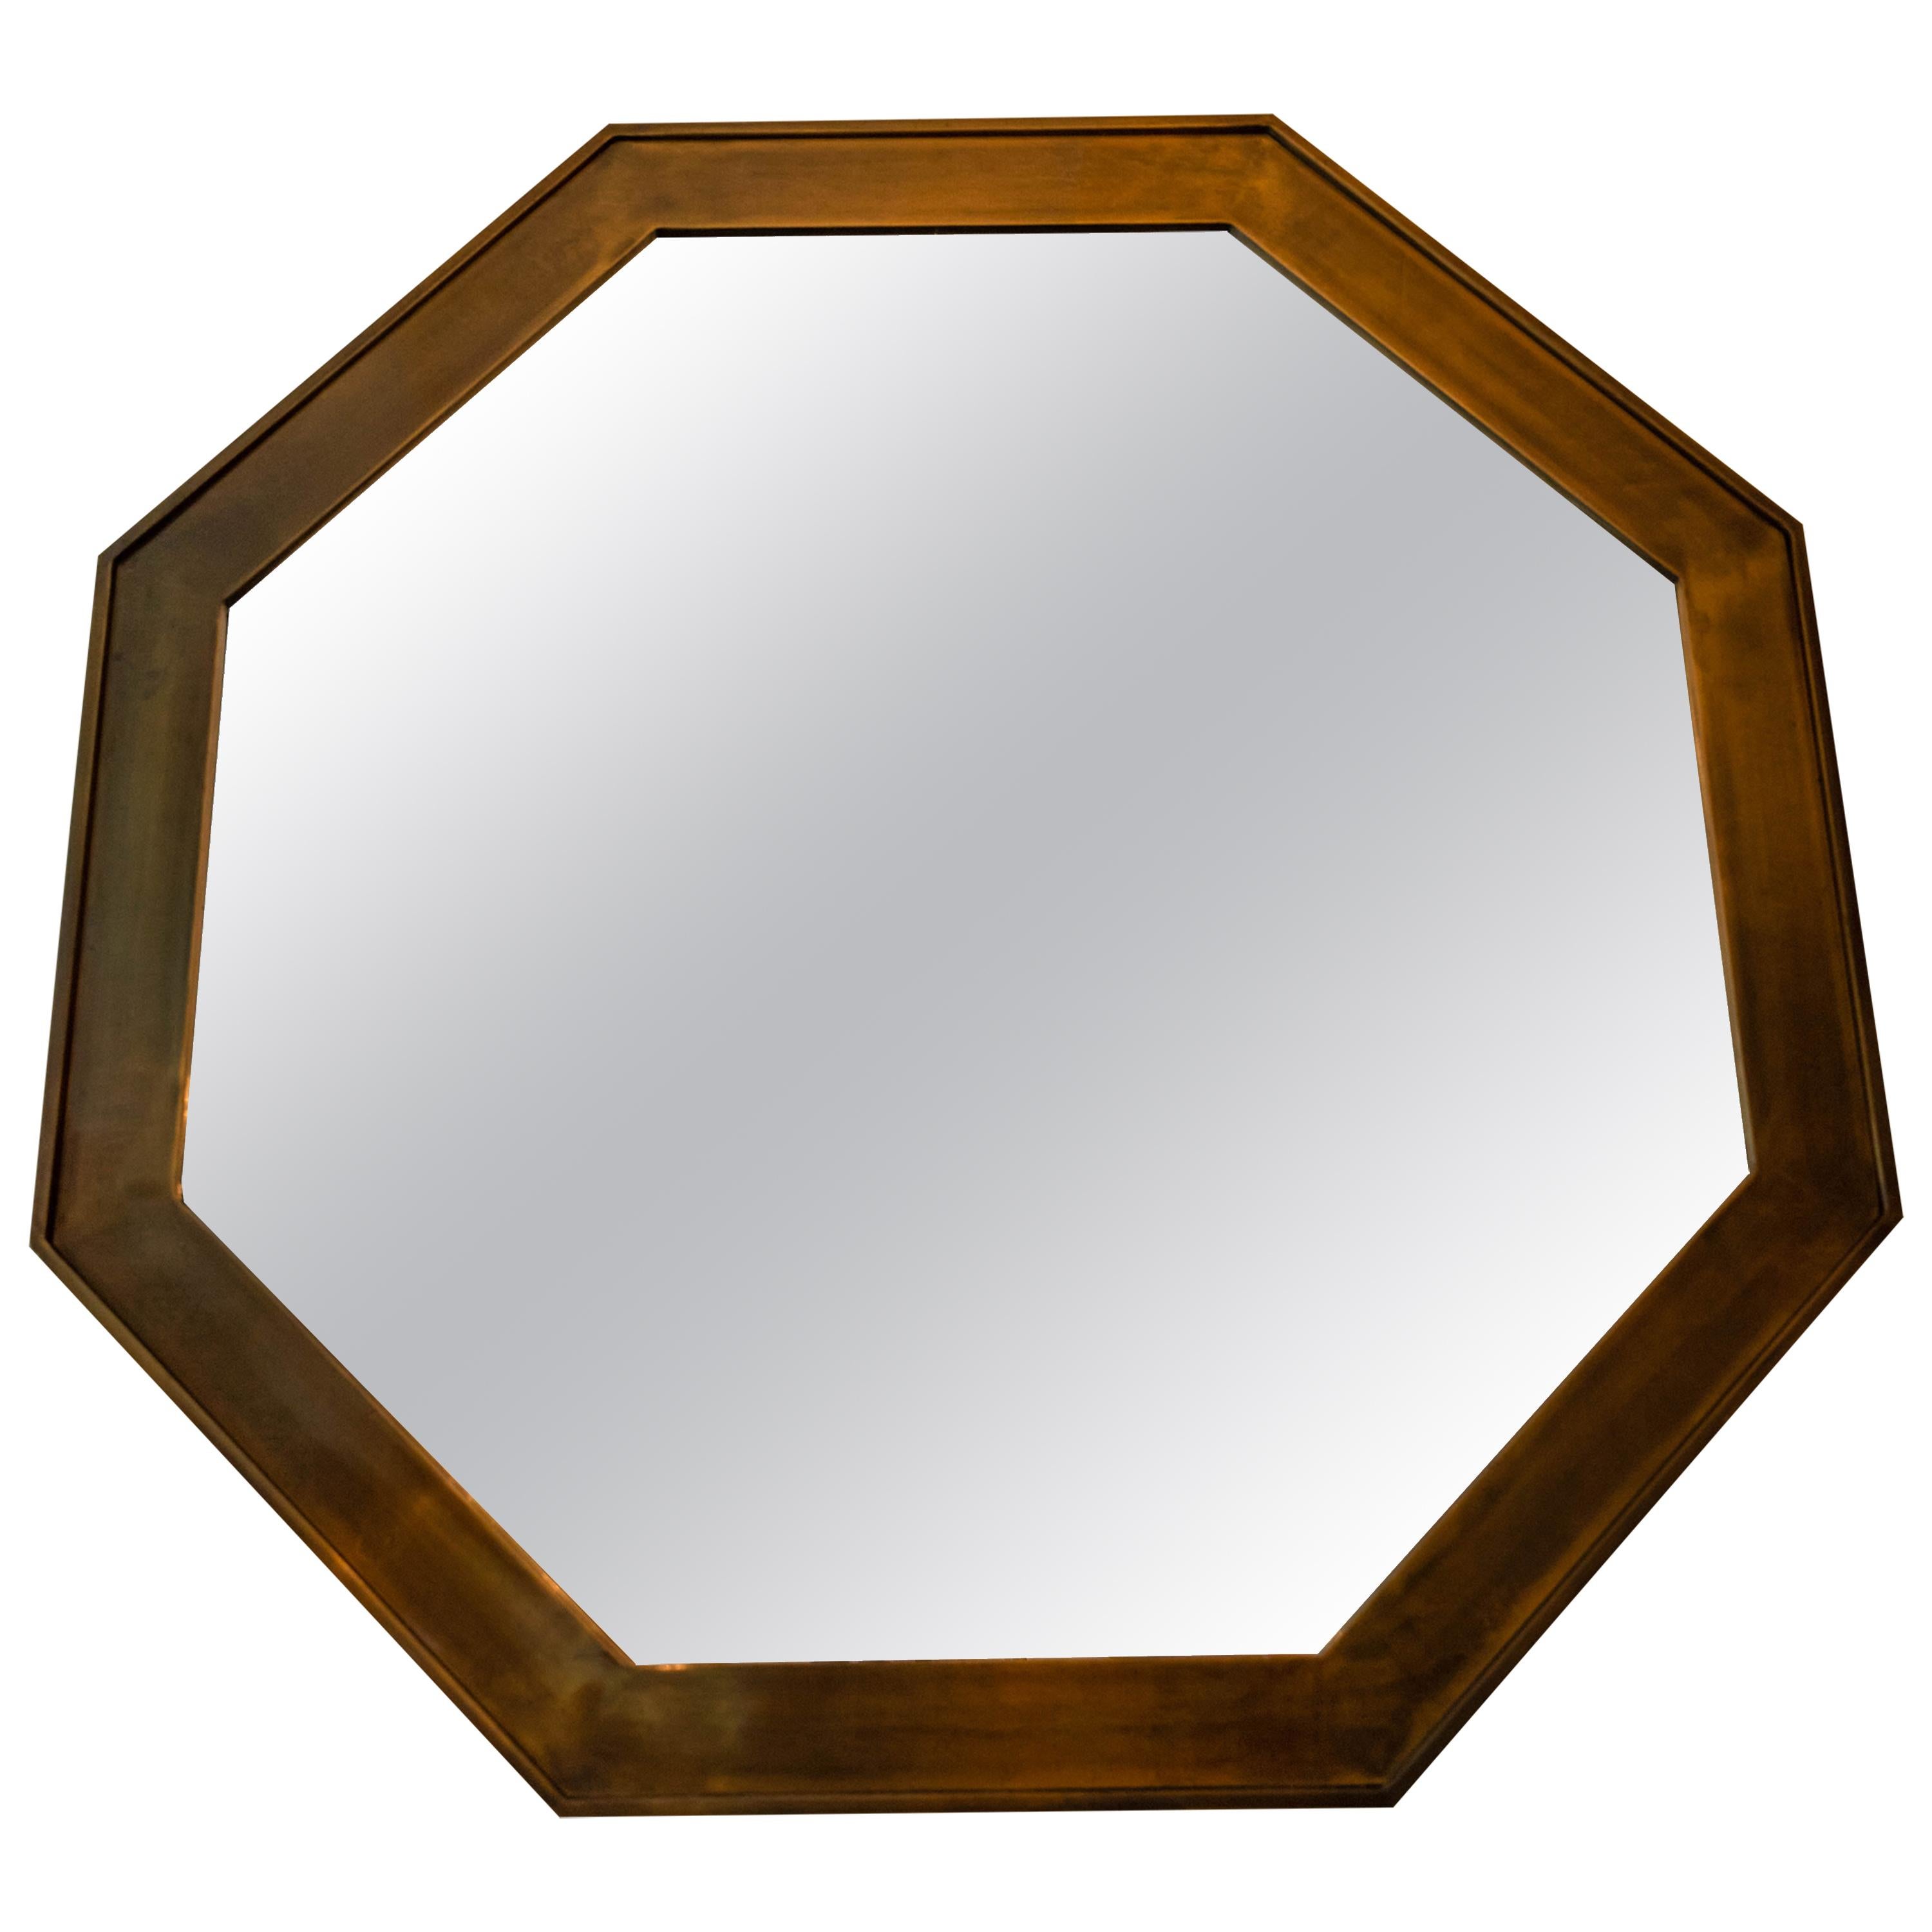 Octagonal Patinated Surround Mirror, by Mastercraft